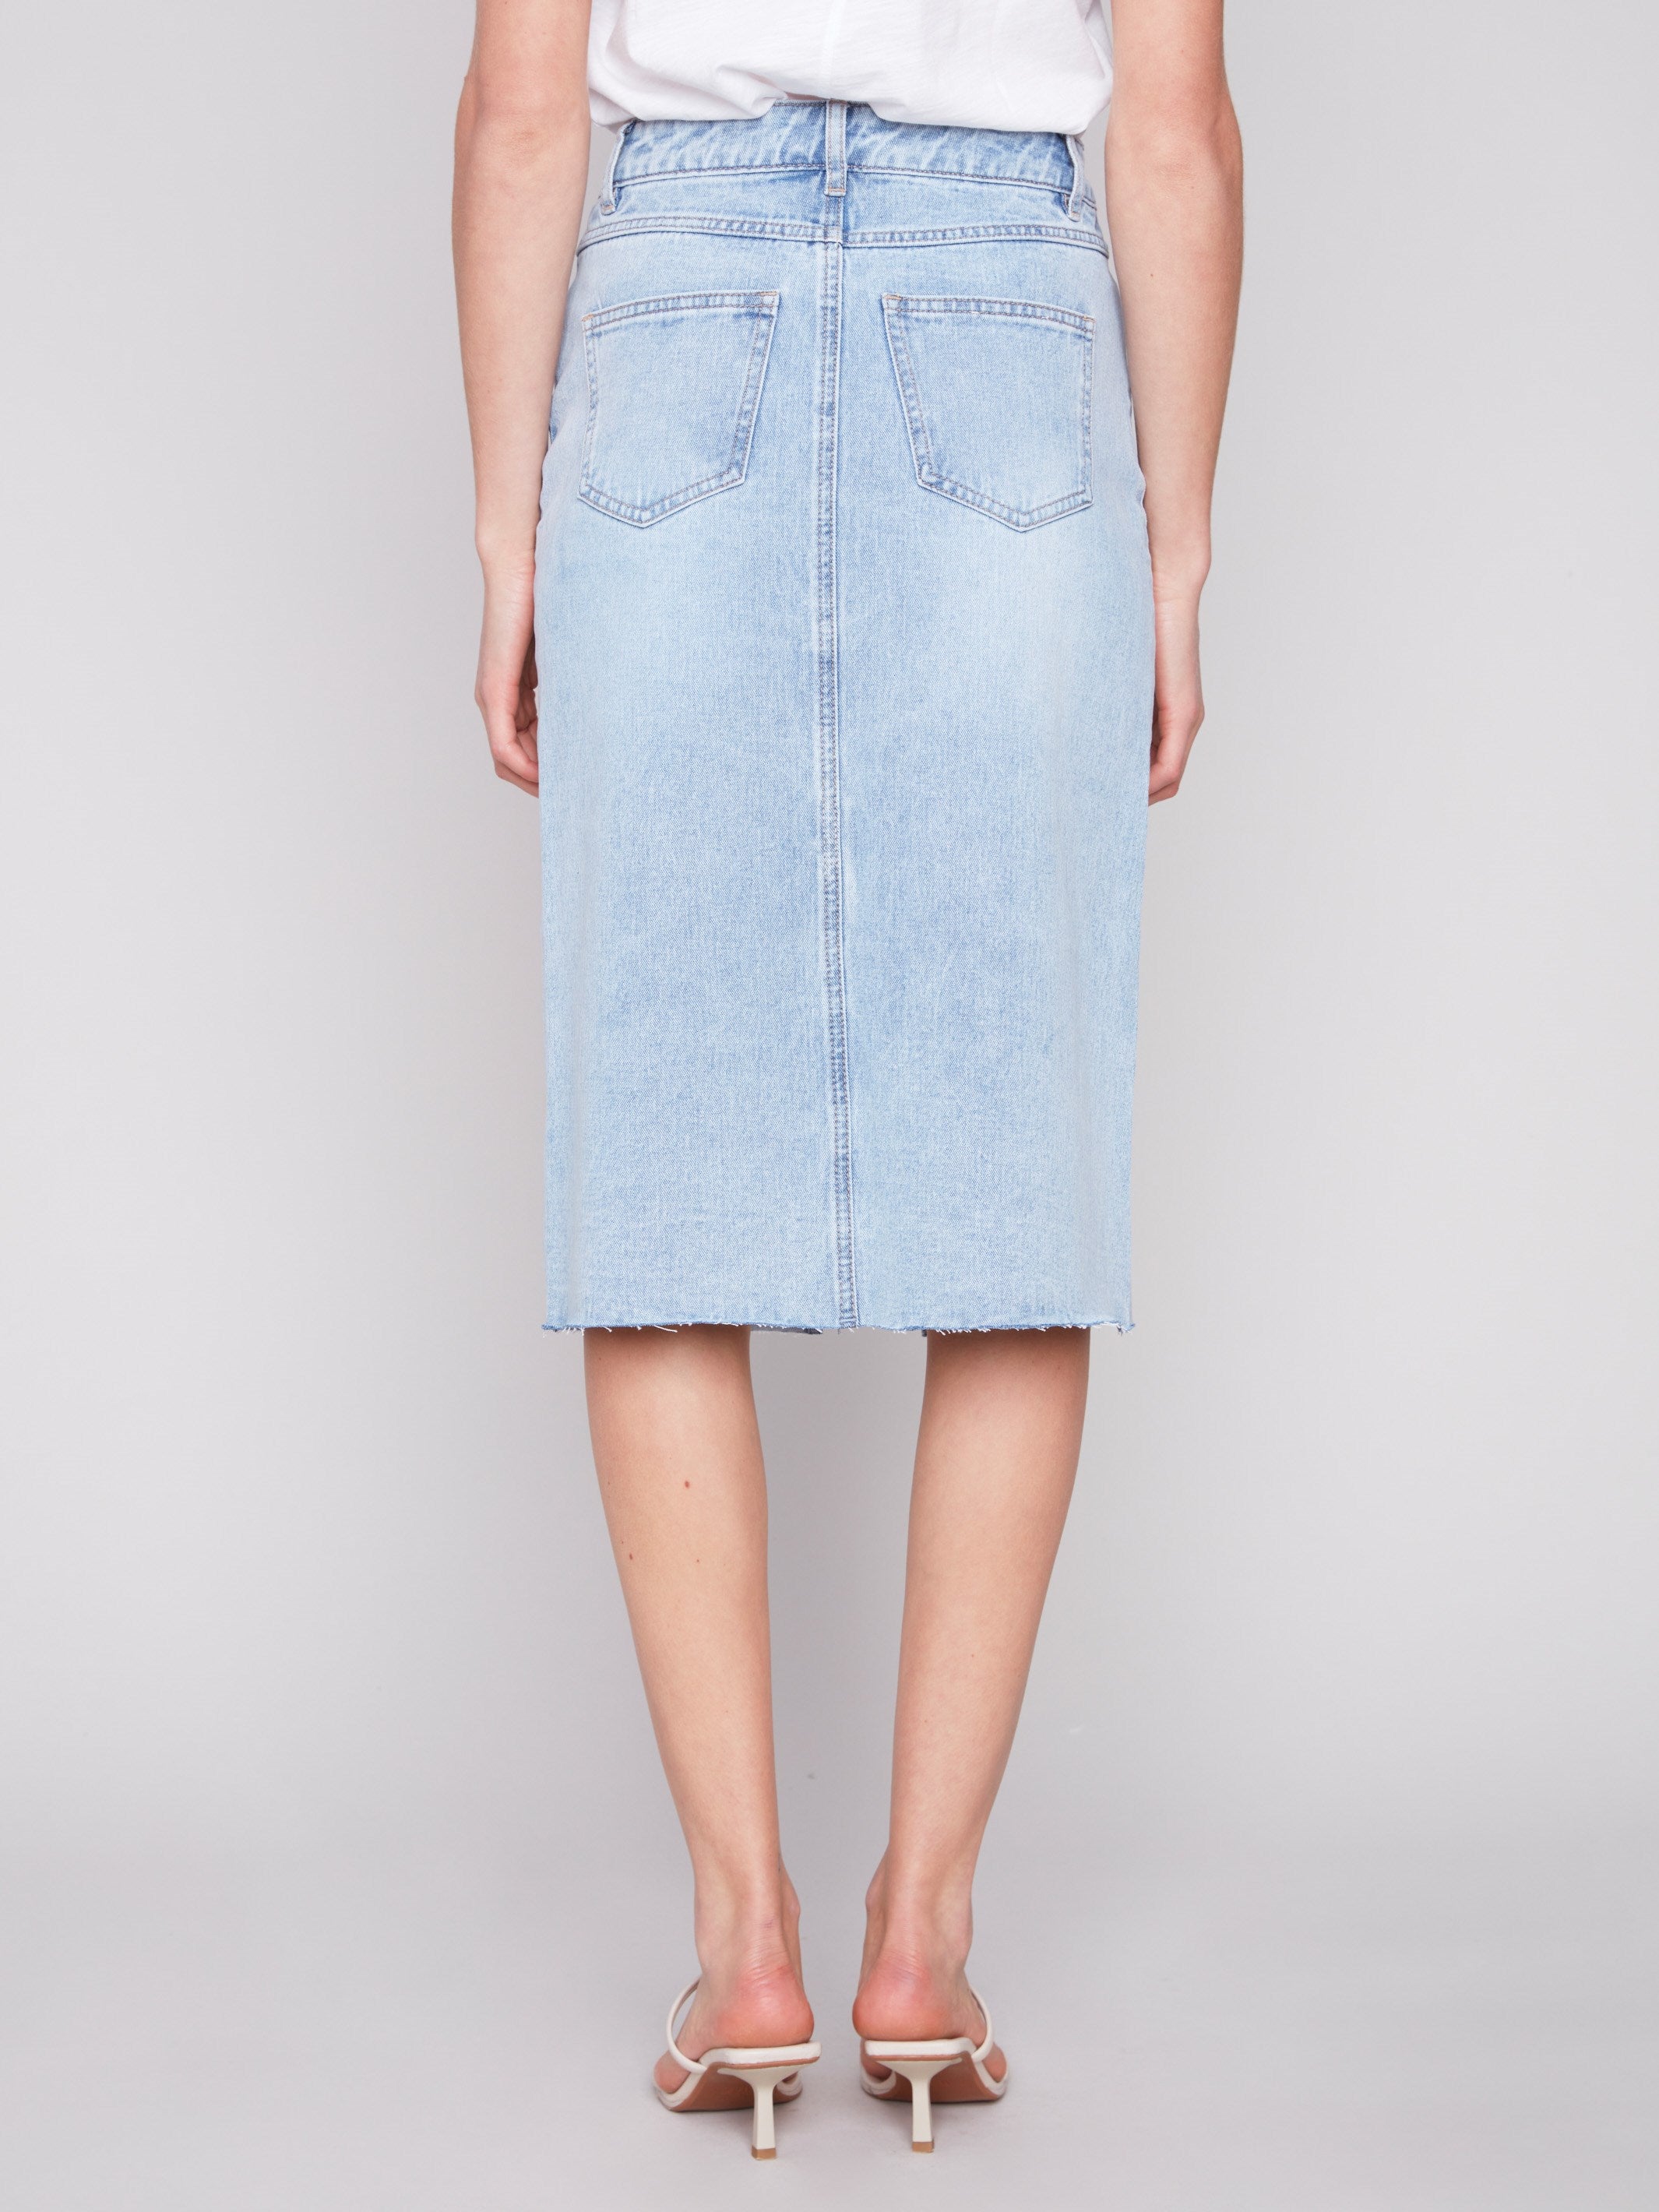 Denim Midi Skirt with Frayed Hem - Light Blue - Charlie B Collection Canada - Image 4